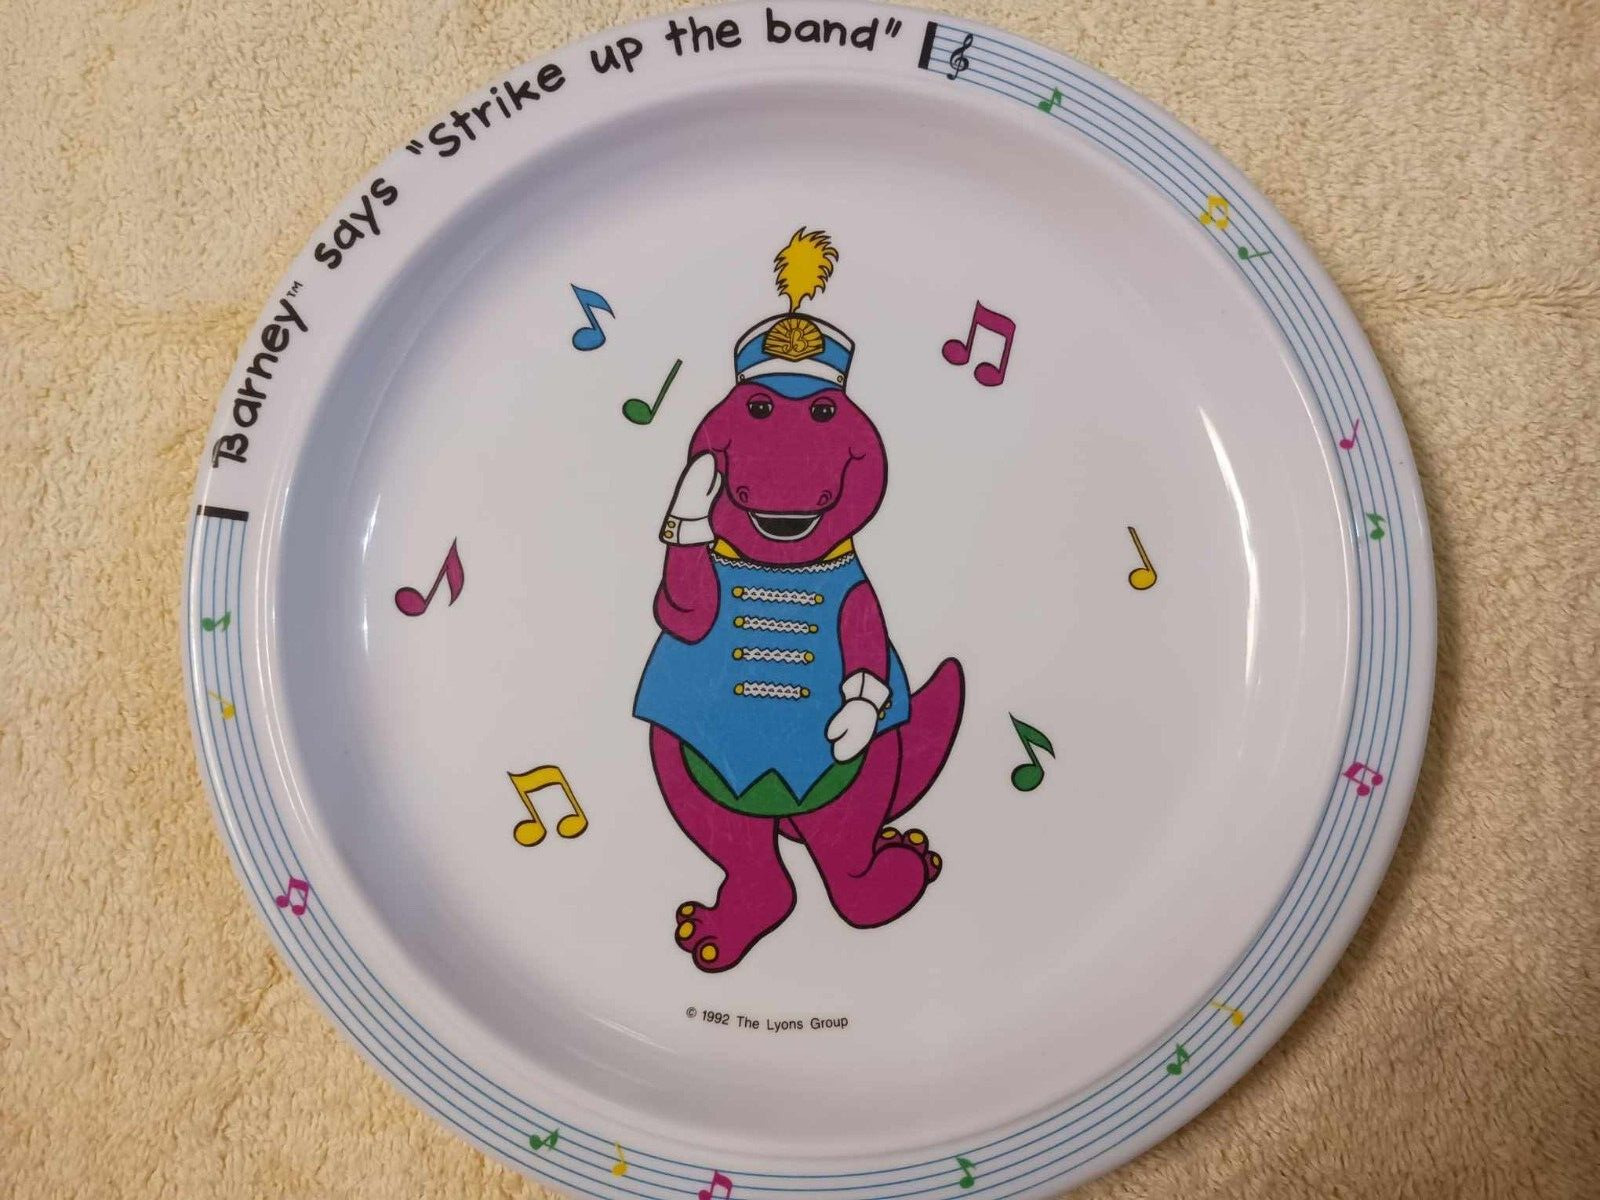 VINTAGE Barney The Dinosaur Plate “Strike Up The Band